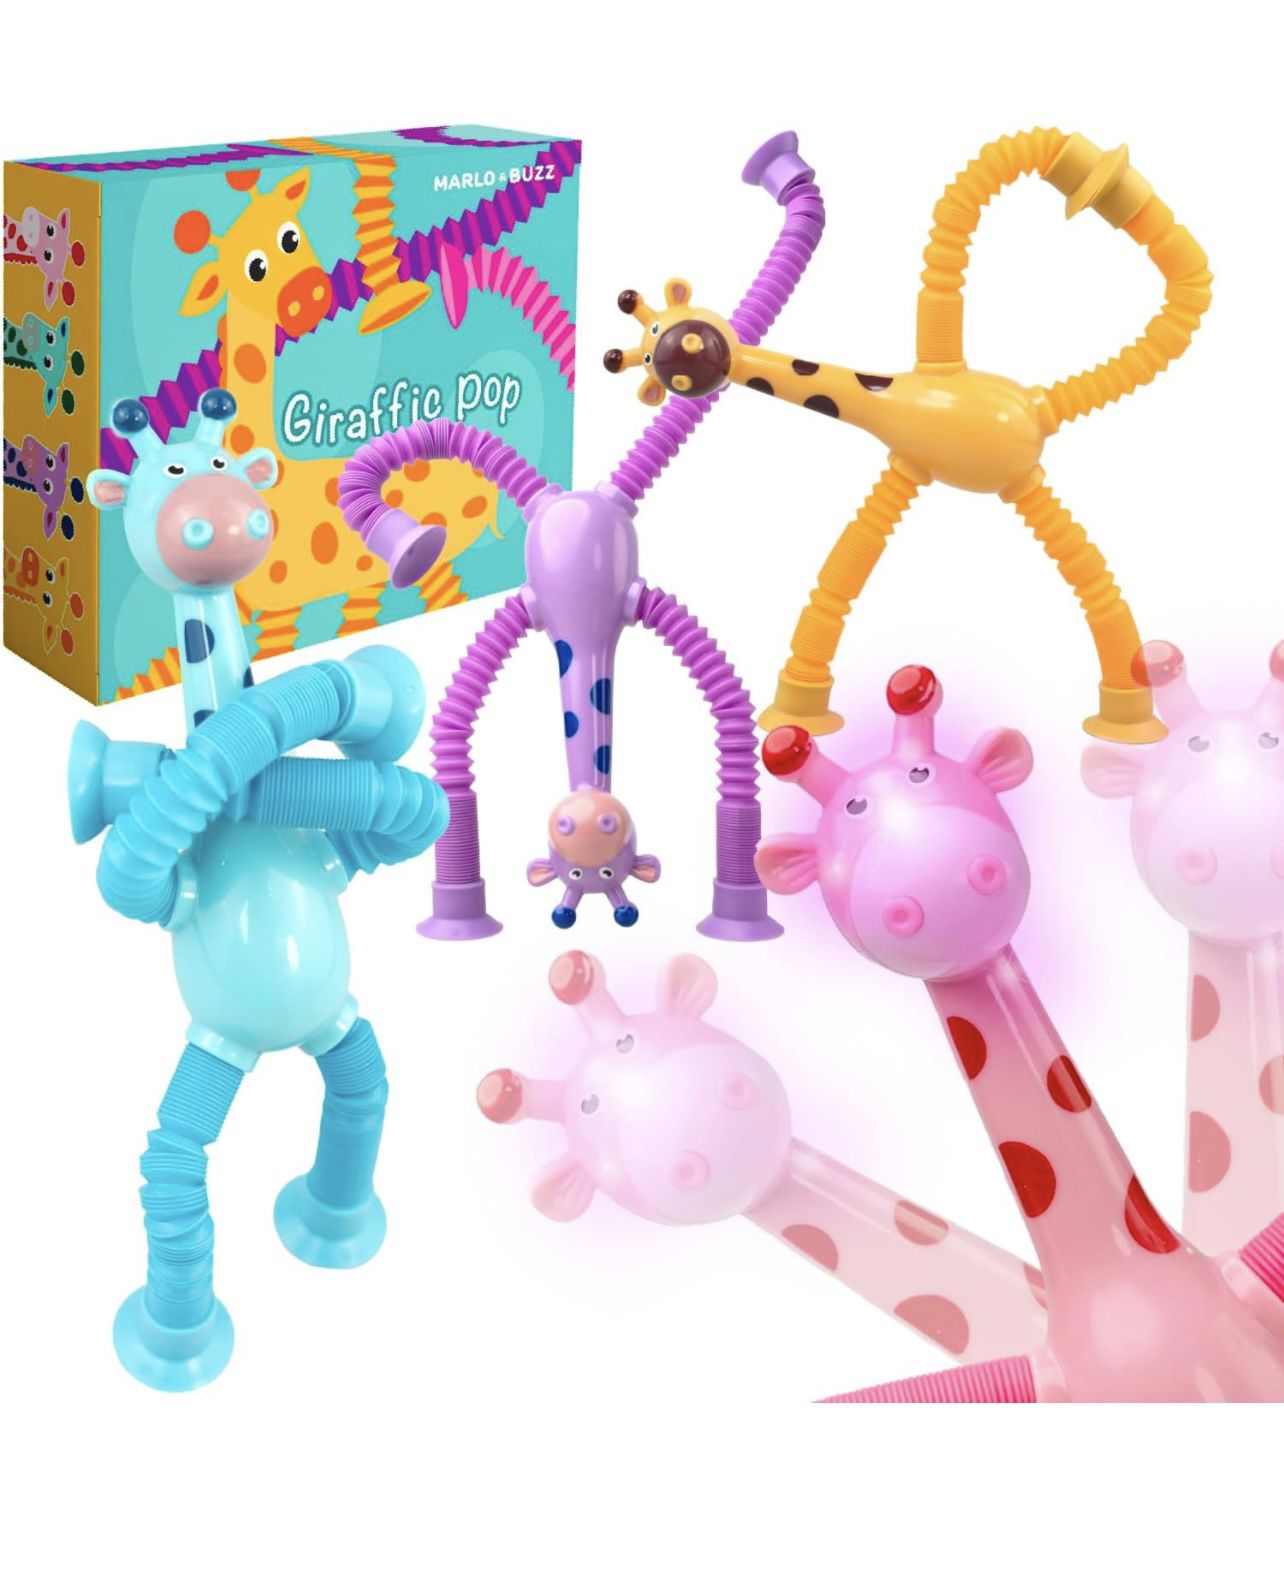 telescopic suction cup giraffe toy